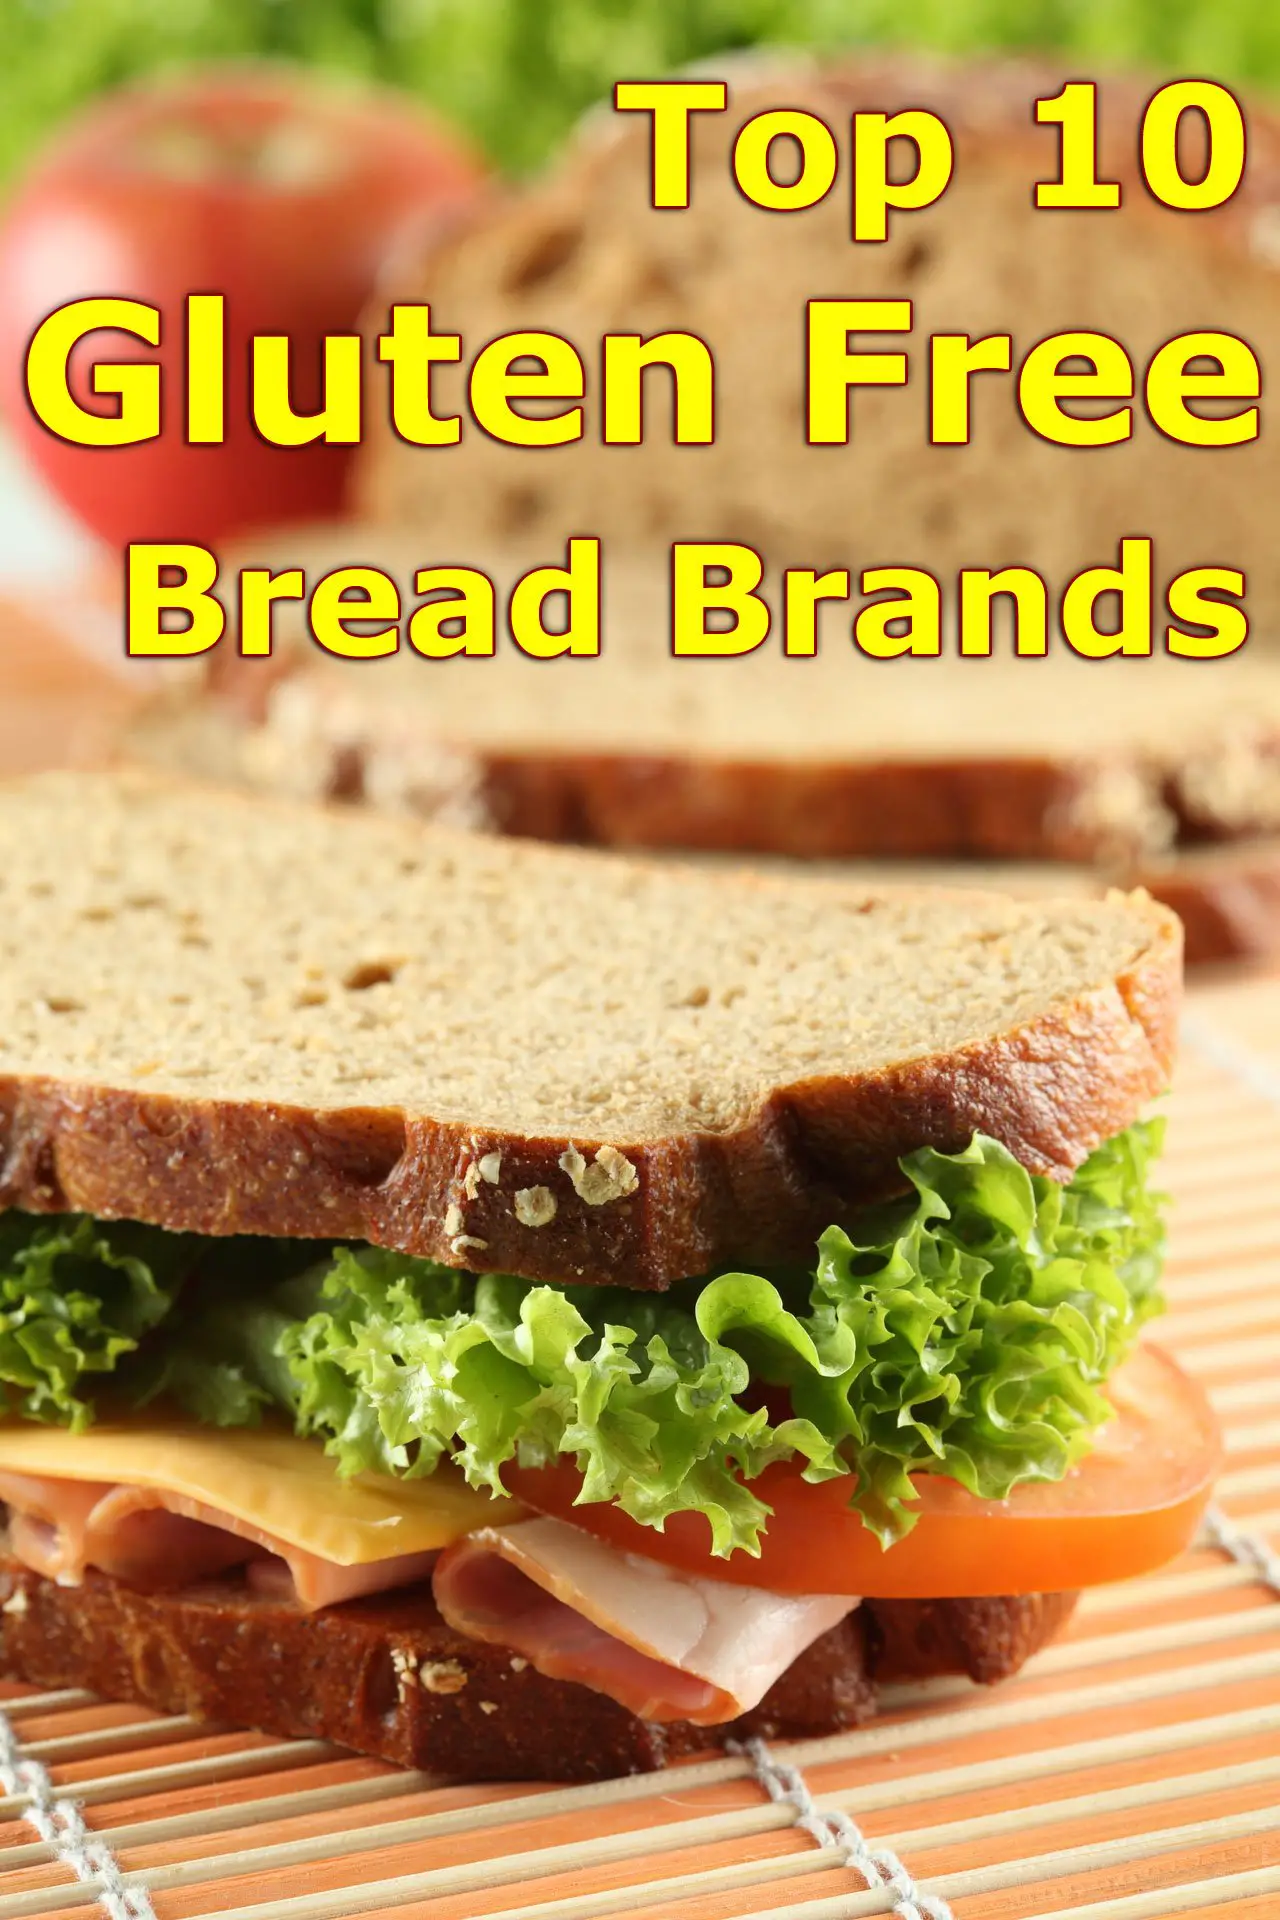 Top 10 Gluten Free Bread Brands